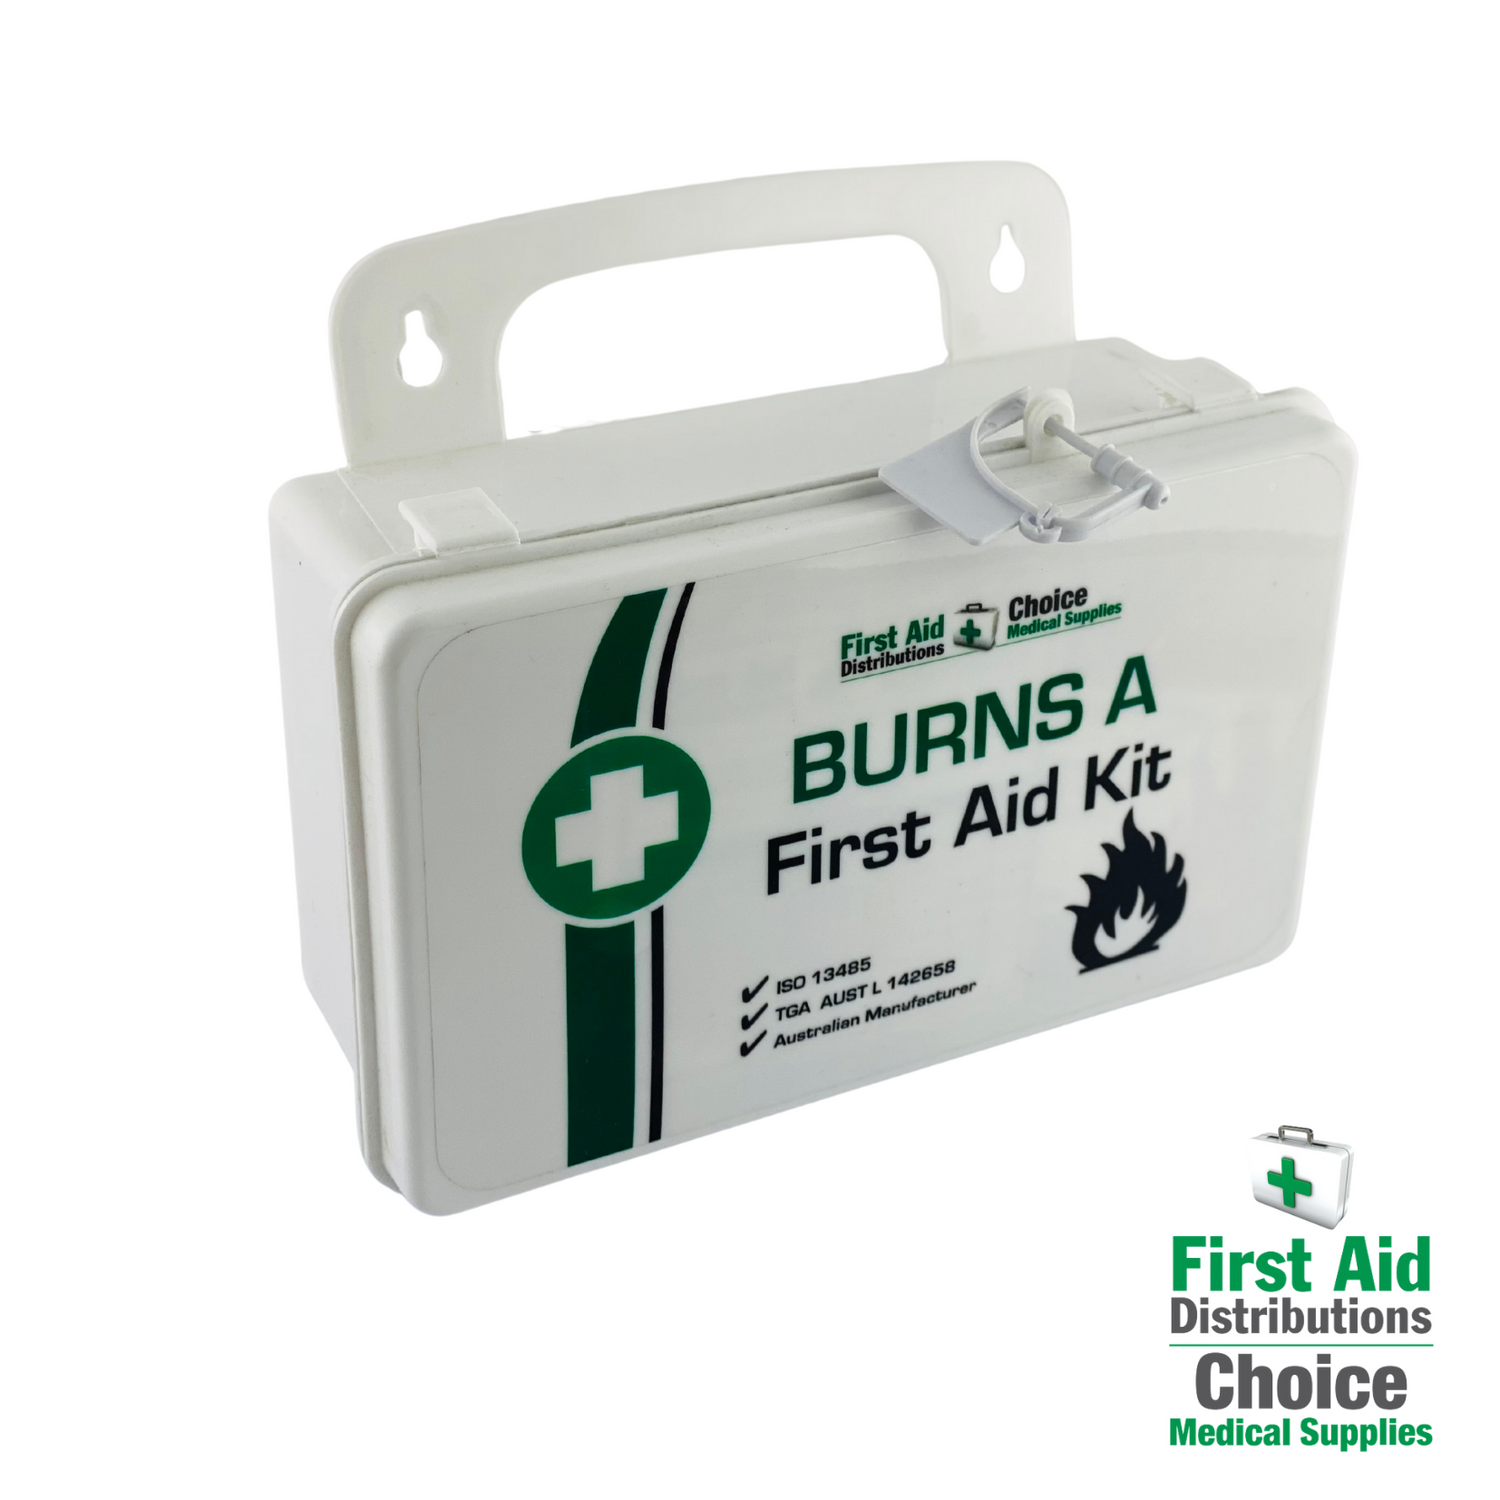 First aid kits - Workplace Budget